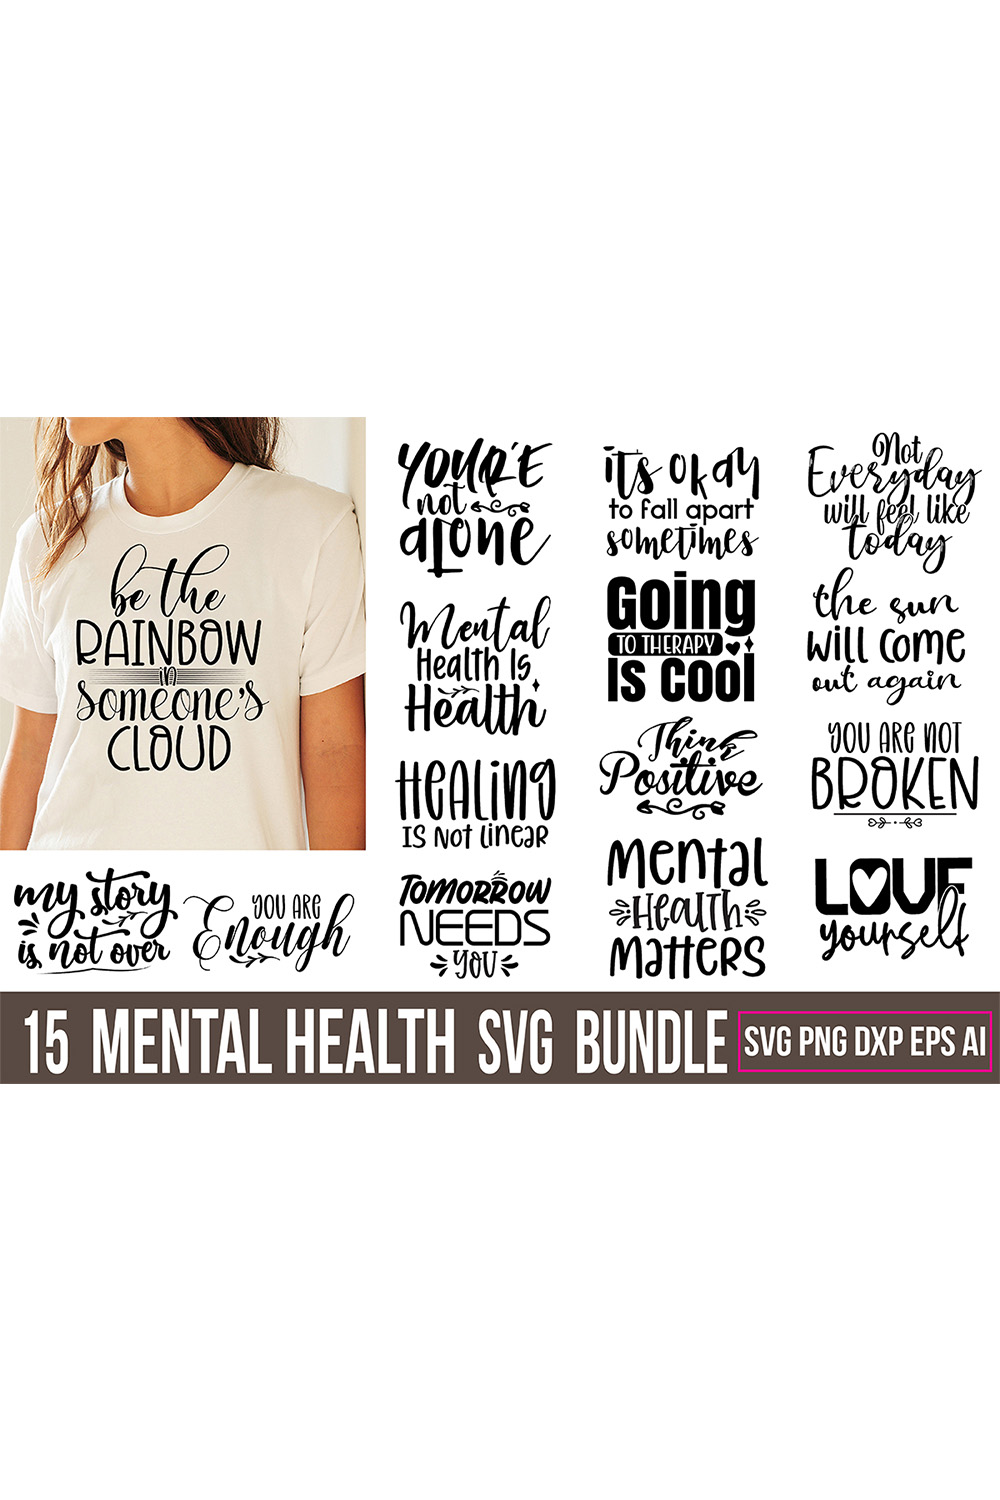 T-shirt Typography Mental Health SVG Design pinterest image.